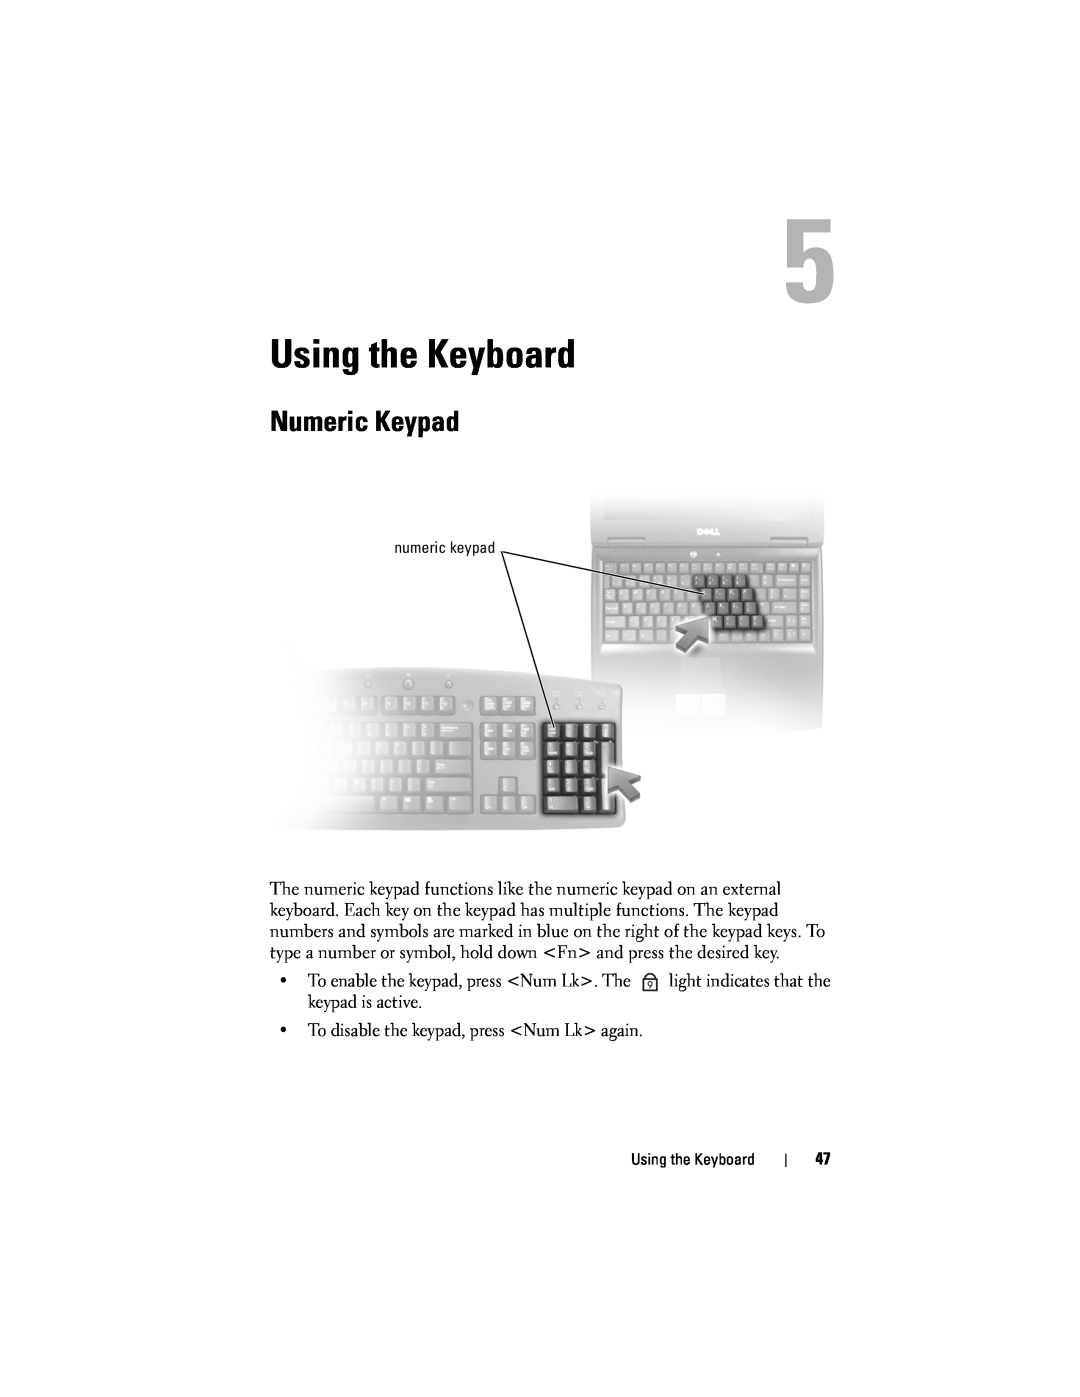 Dell D530 manual Using the Keyboard, Numeric Keypad 